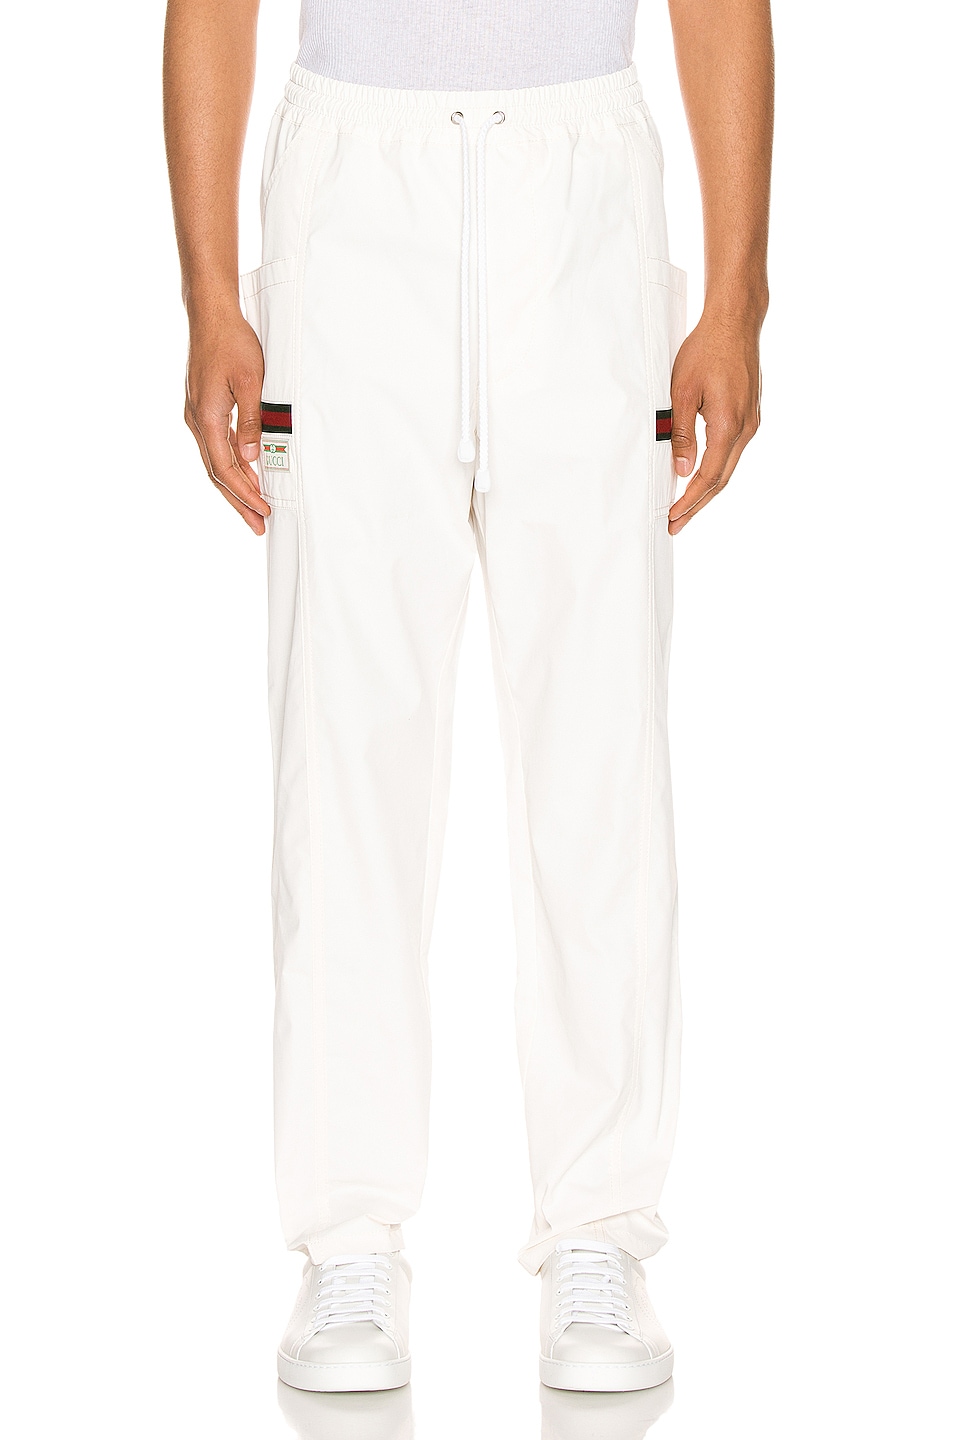 Gucci Cotton Canvas Pant With Gucci Label in White & Multi | FWRD